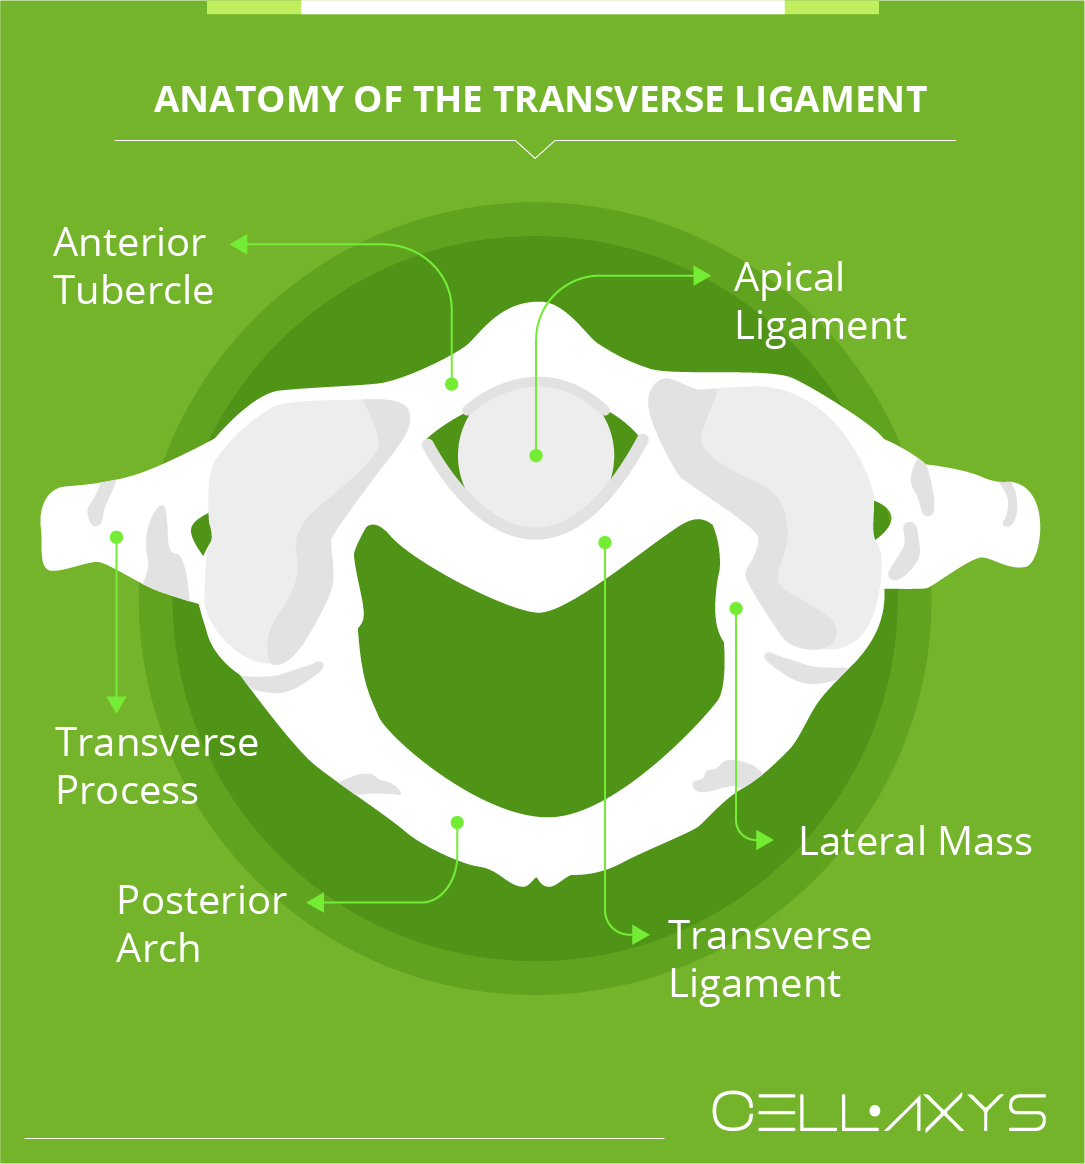 Anatomy of the Transverse Ligament